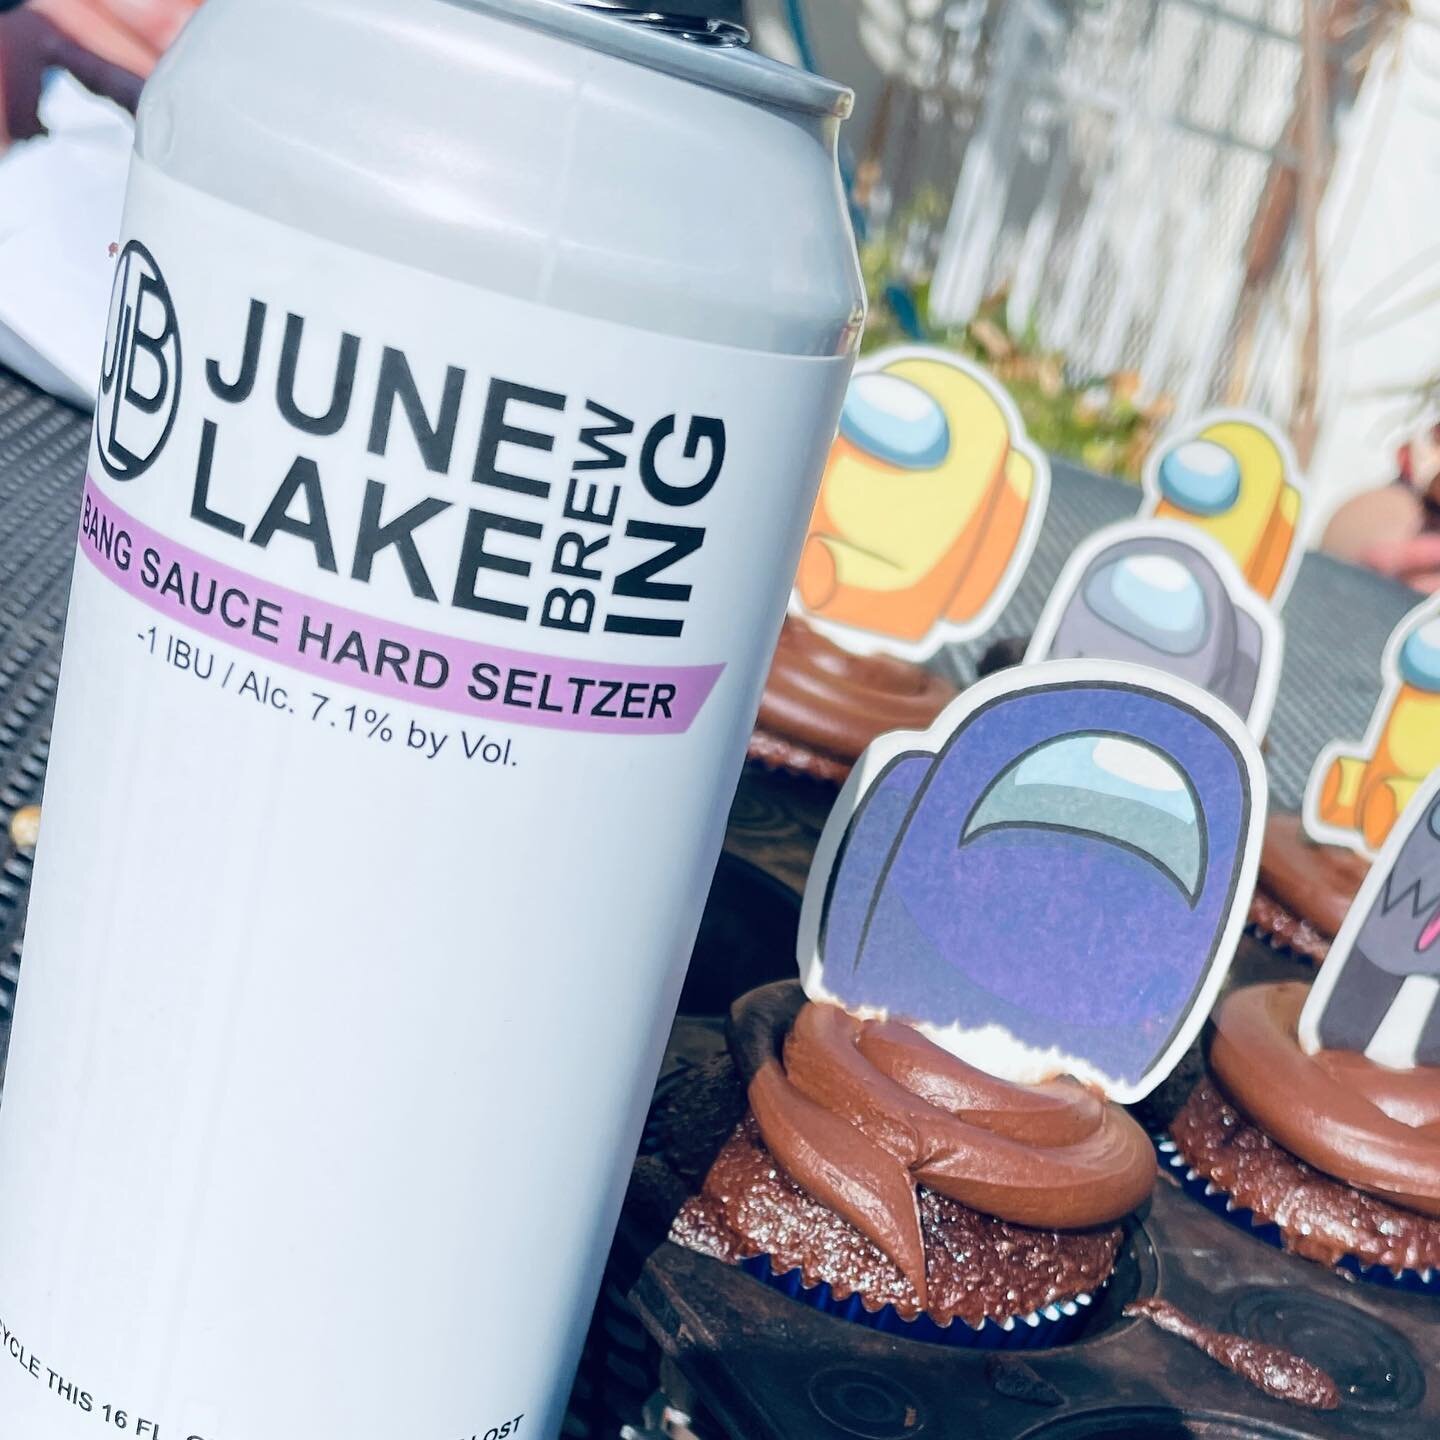 @junelakebrewing + cupcakes. Almost as good as #superawesomebeer and powder.
#cupcakes
#jlbisbeer #junelakebrewing #cupcakes
#abs #hottie #chulavista